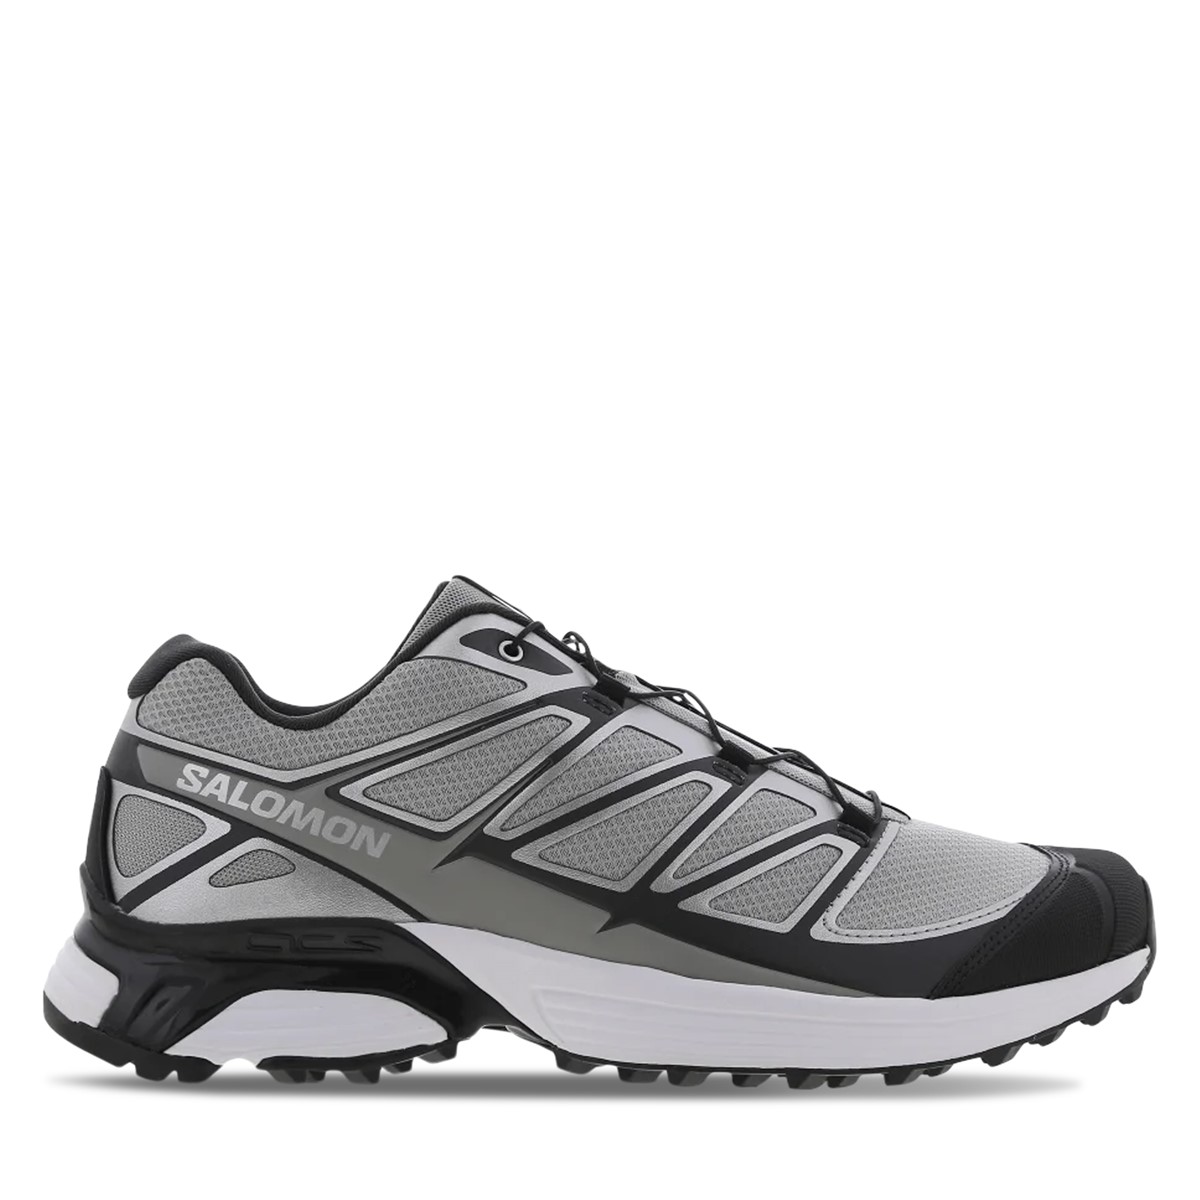 XT Pathway Sneakers in Black/Grey